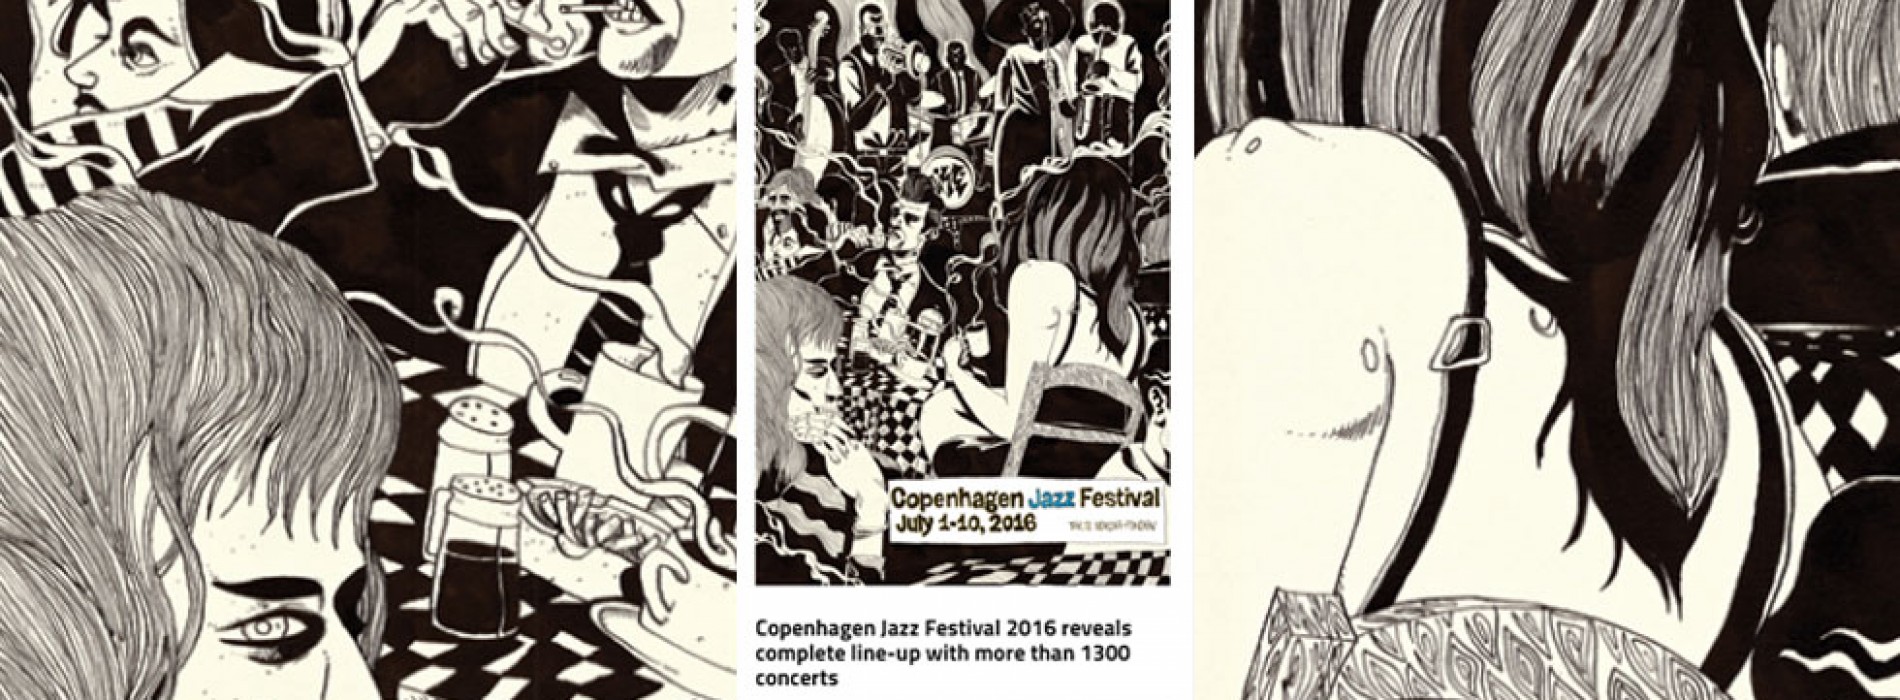 Copenhagen Jazz Festival 2016 reveals complete line-up with over 1300 concerts